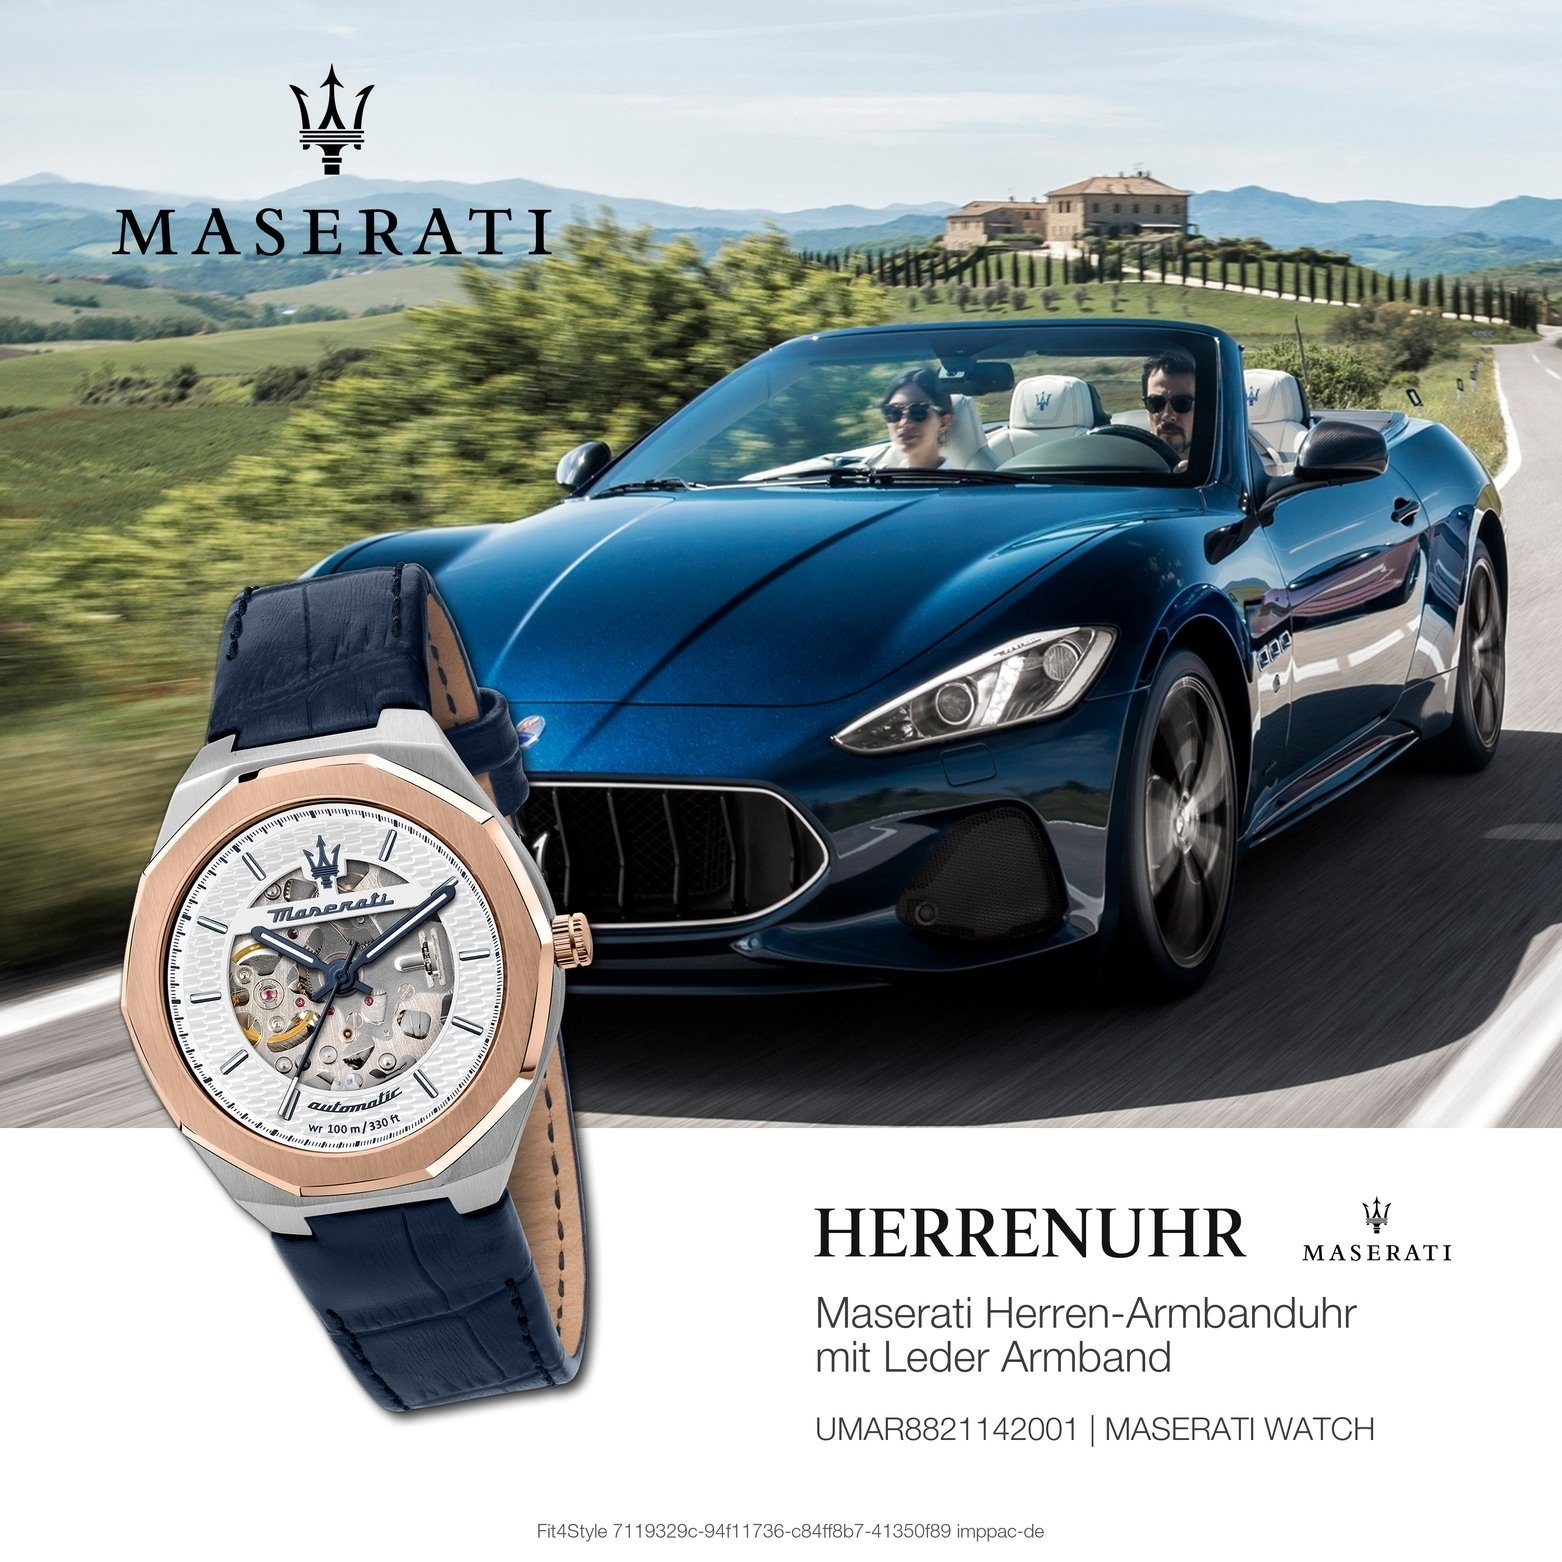 MASERATI Quarzuhr Maserati Herrenuhr Lederarmband, (ca. STILE, Uhr Italy 42mm) Made-In Herren Analog groß rund